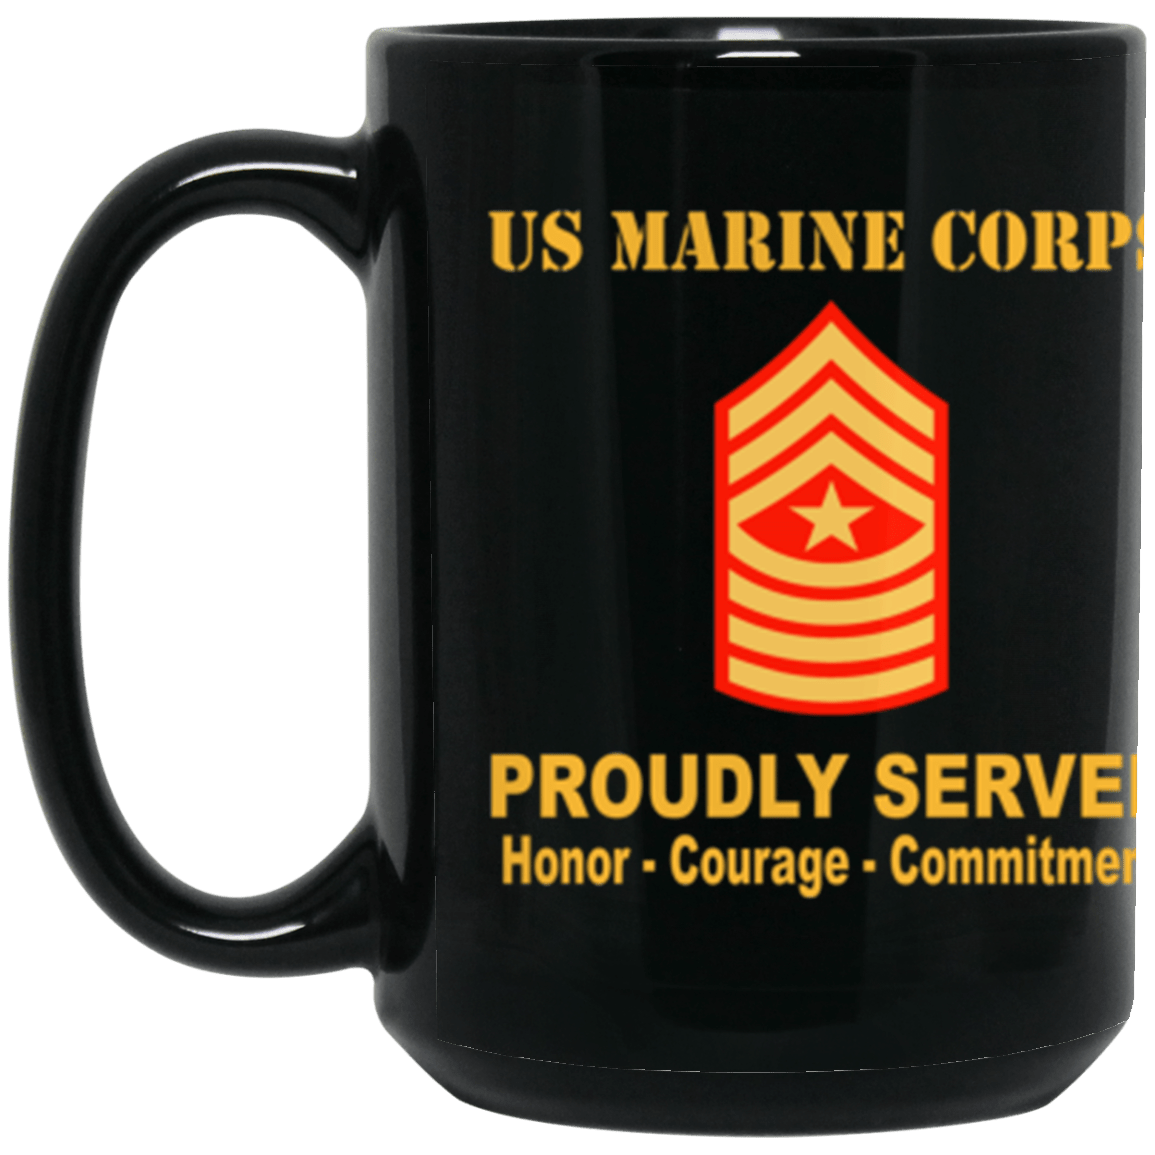 USMC E-9 SgtMa E9 Sergeant Major Senior Enlisted Advisor Ranks Proudly Served Core Values 15 oz. Black Mug